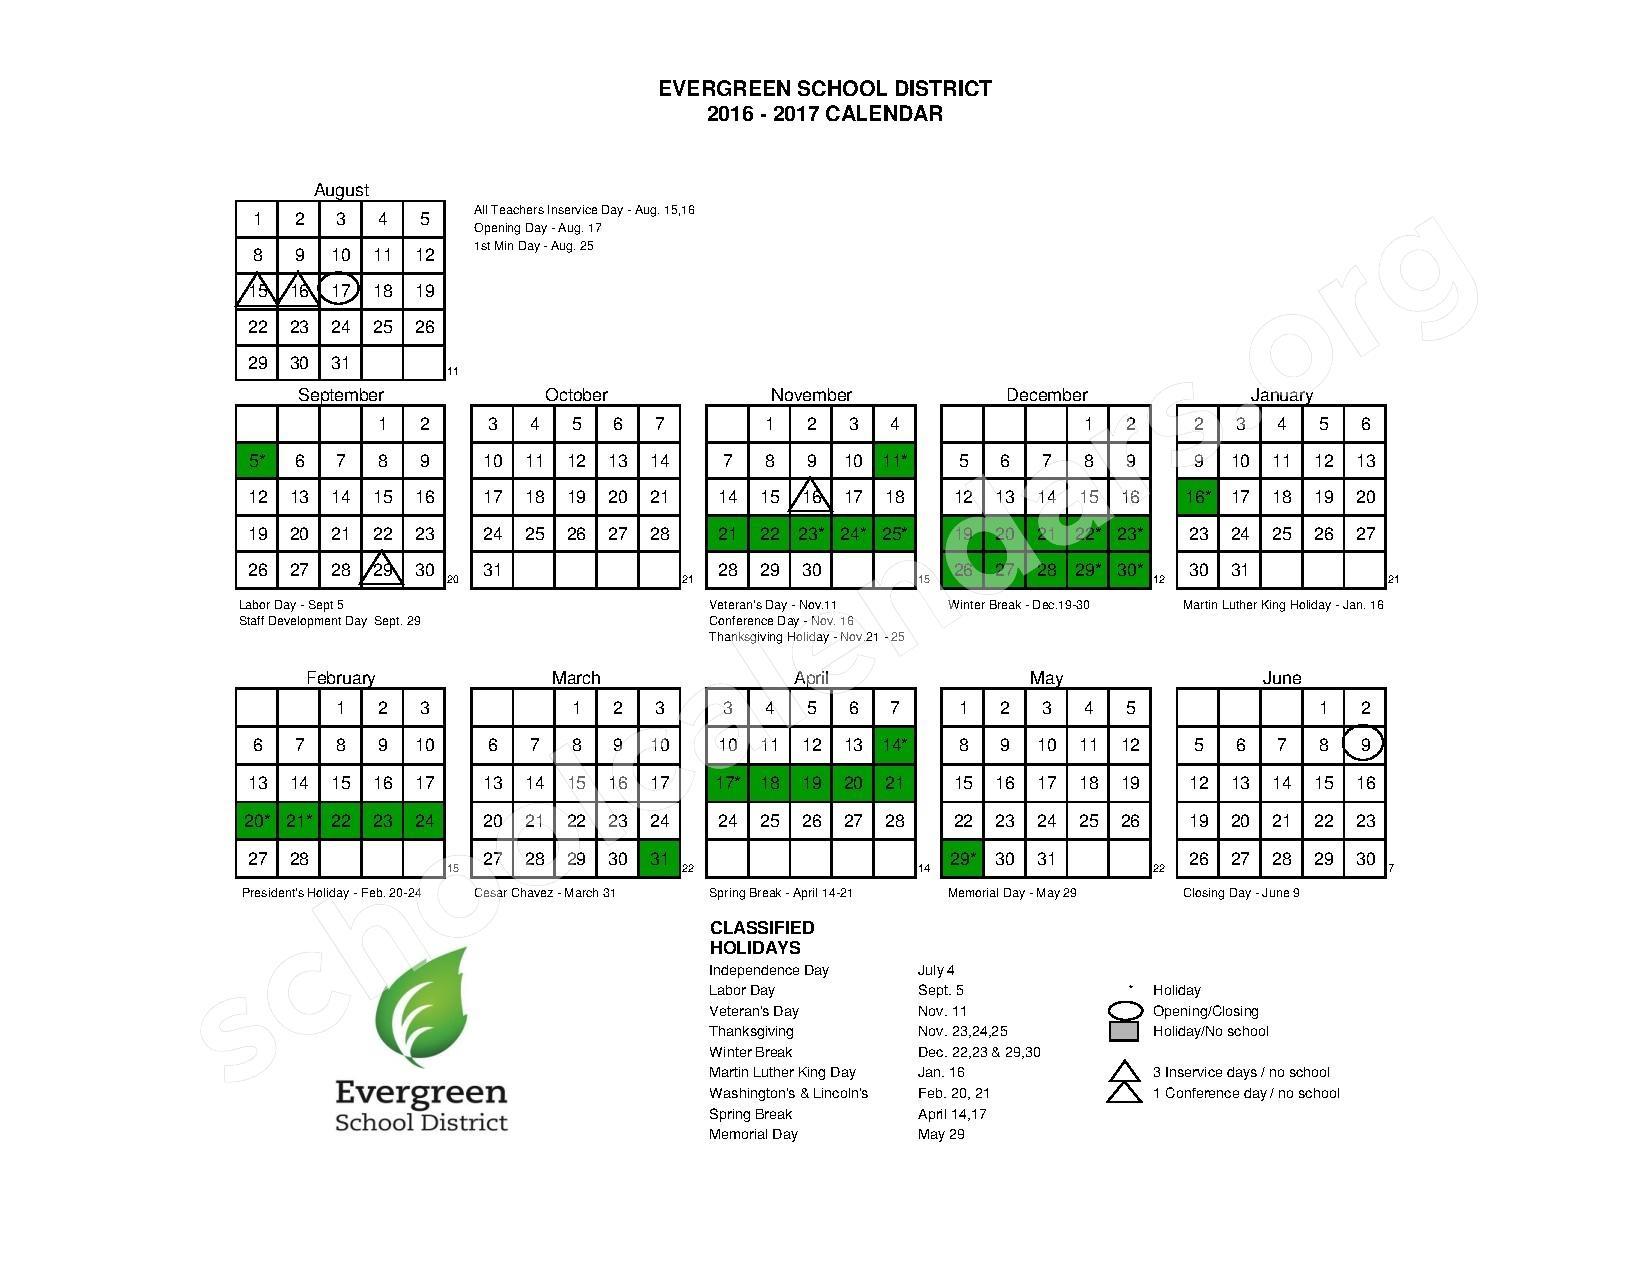 evergreen-school-district-calendar-qualads